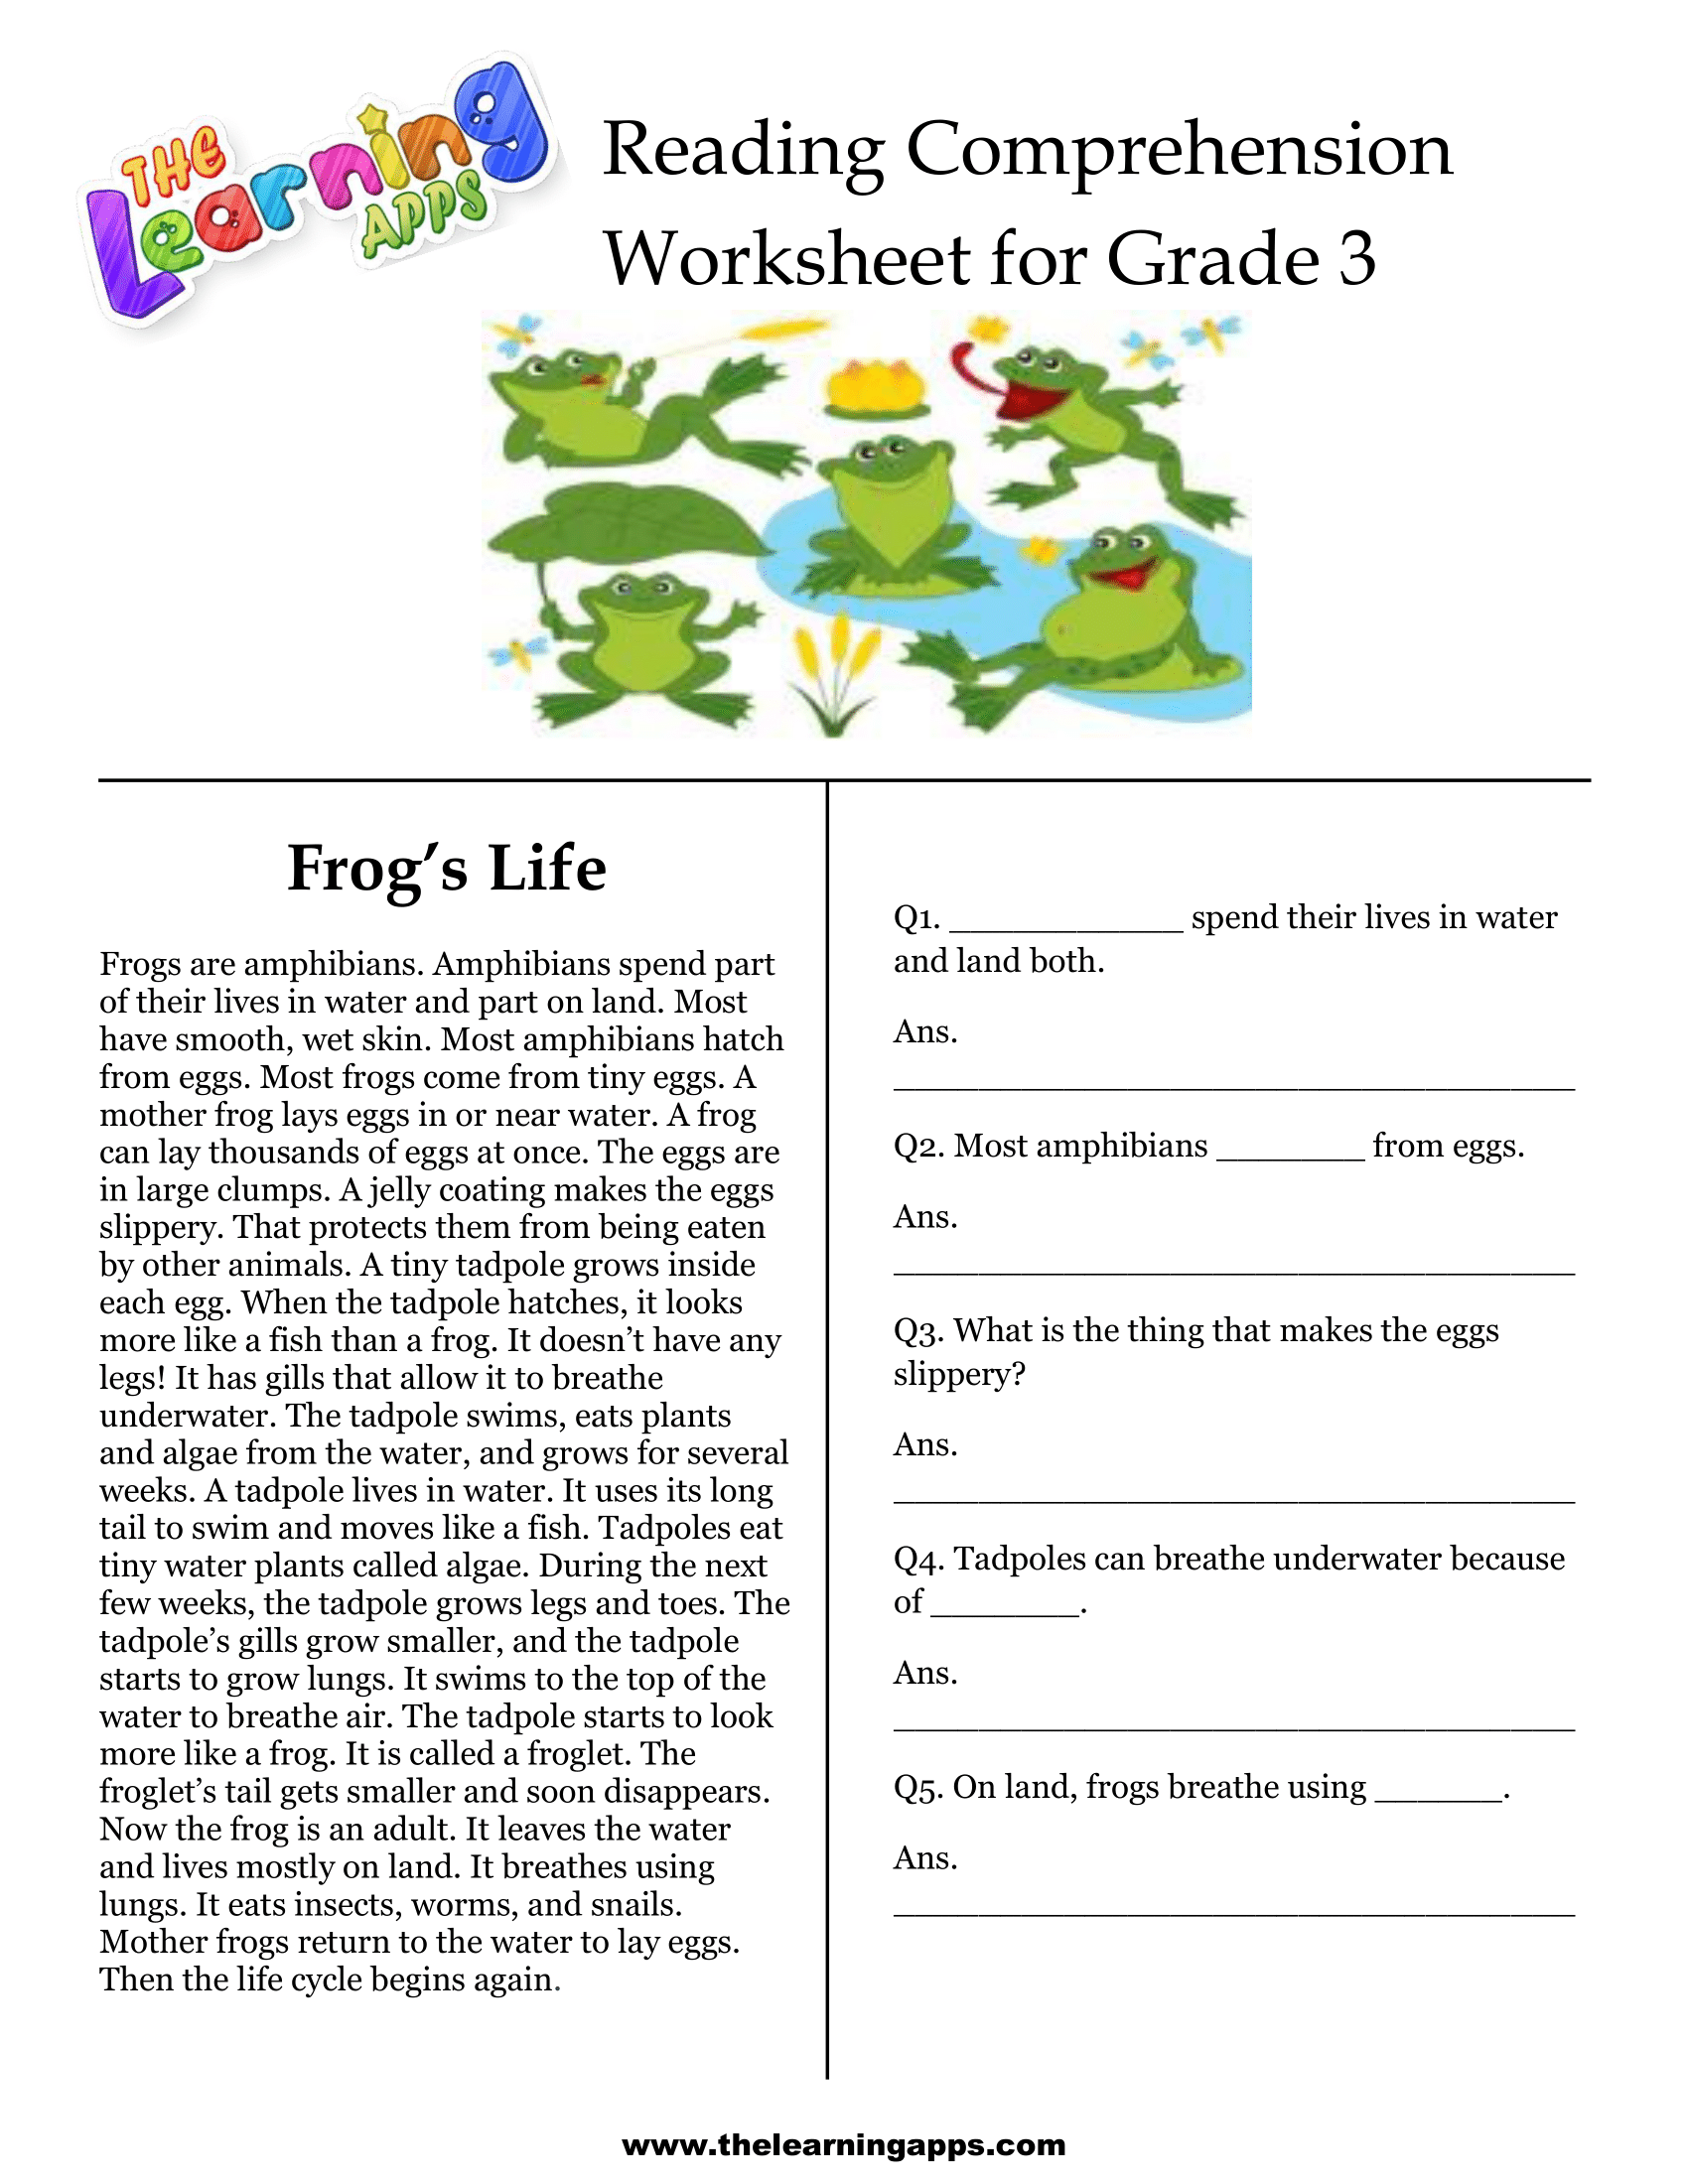 3rd Grade Reading Comprehension Printable Free Reading Comprehension Worksheets 3rd Grade Reading Comprehension Worksheets Reading Comprehension Worksheets